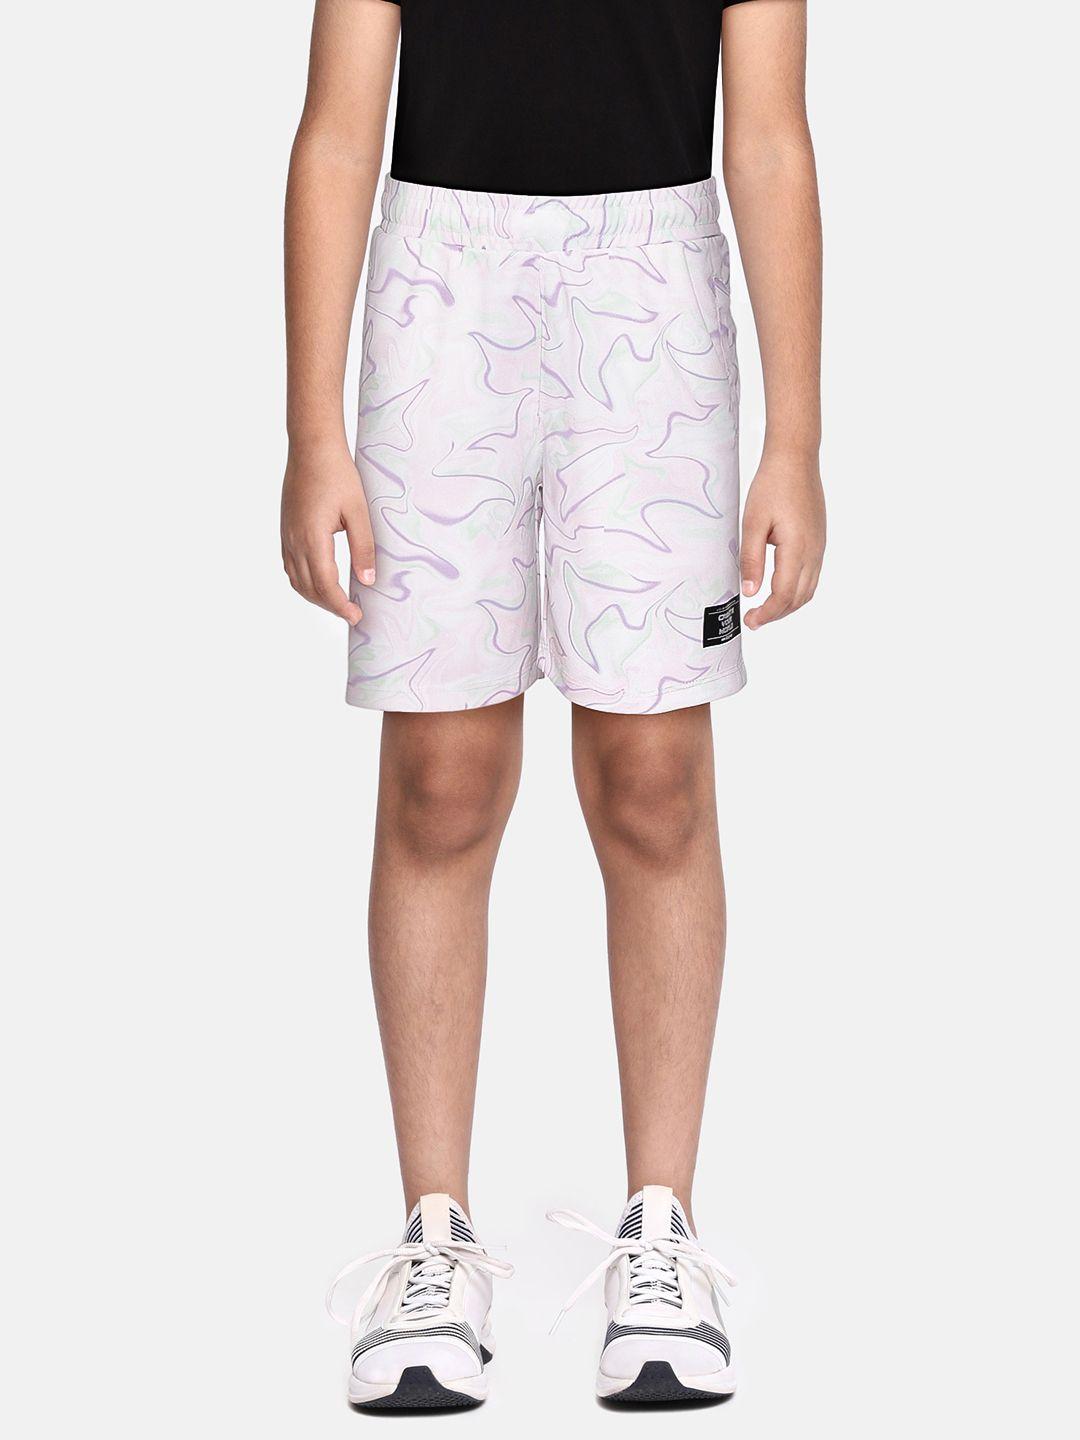 hrx by hrithik roshan u-17 lifestyle boys bright white rapid-dry aop shorts